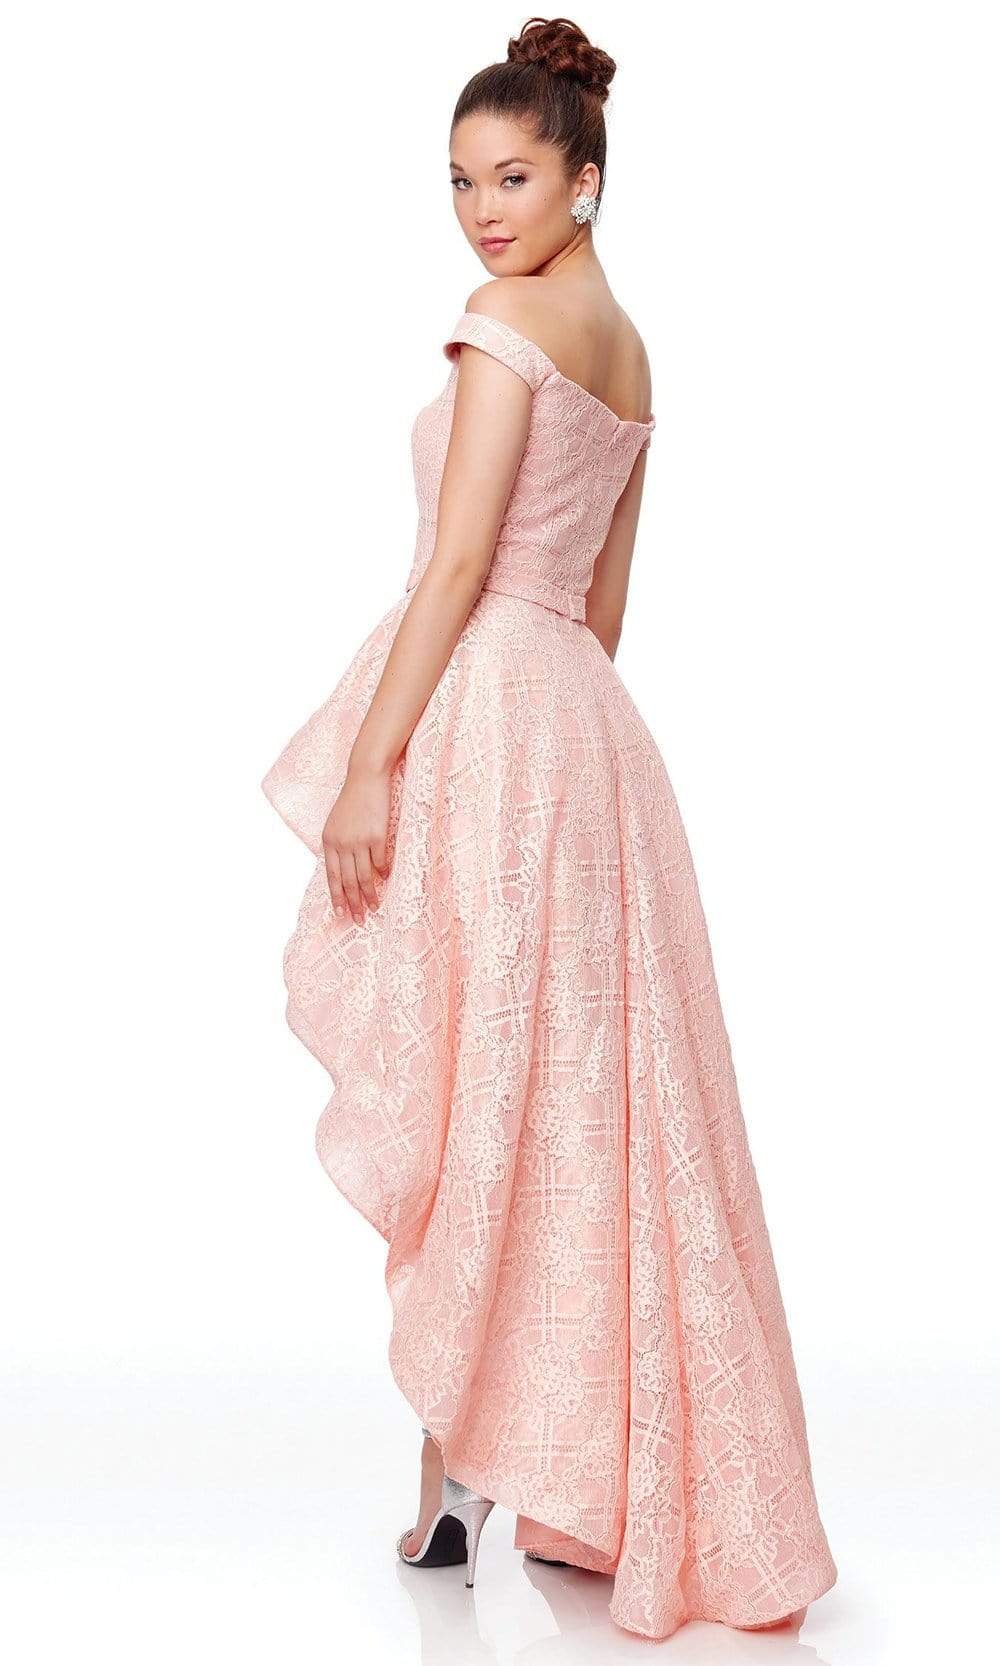 Clarisse - 3730 Off Shoulder Versatile High-low Ballgown Special Occasion Dress